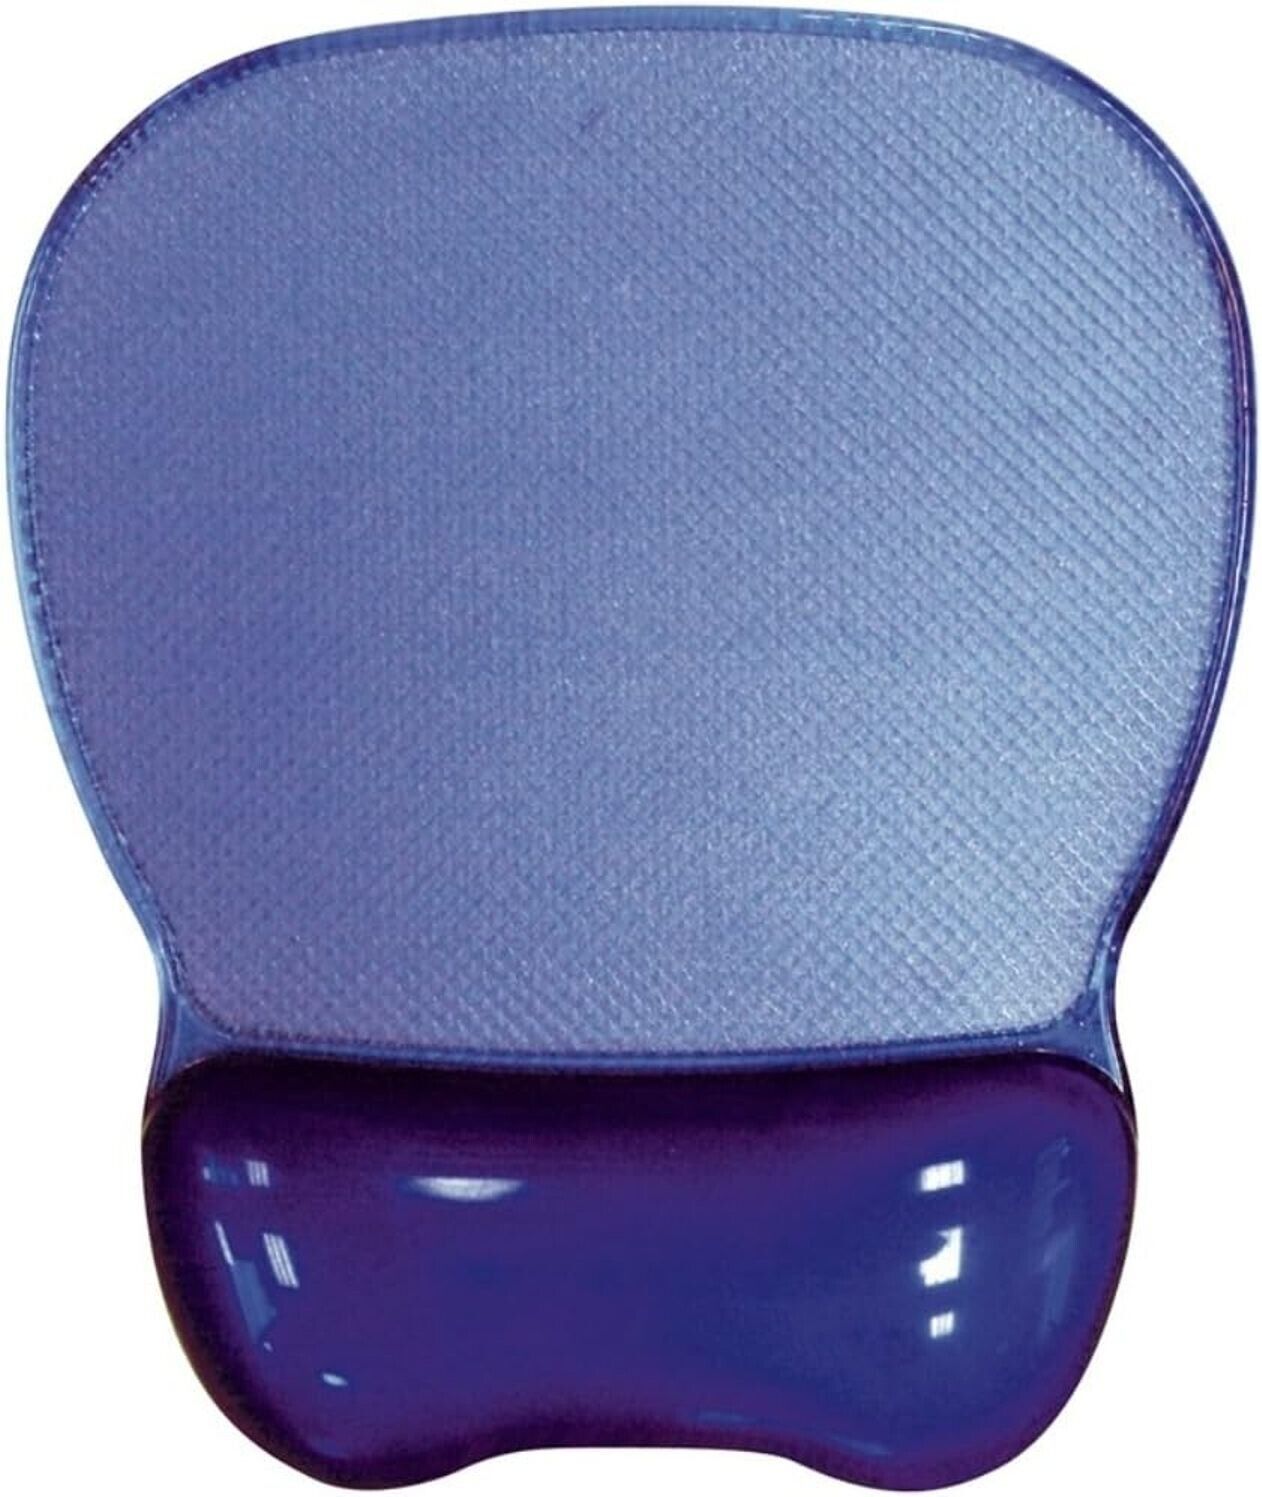 Aidata CGL003P Crystal Gel Mouse Pad Wrist Rest, Purple, Ergonomic Design